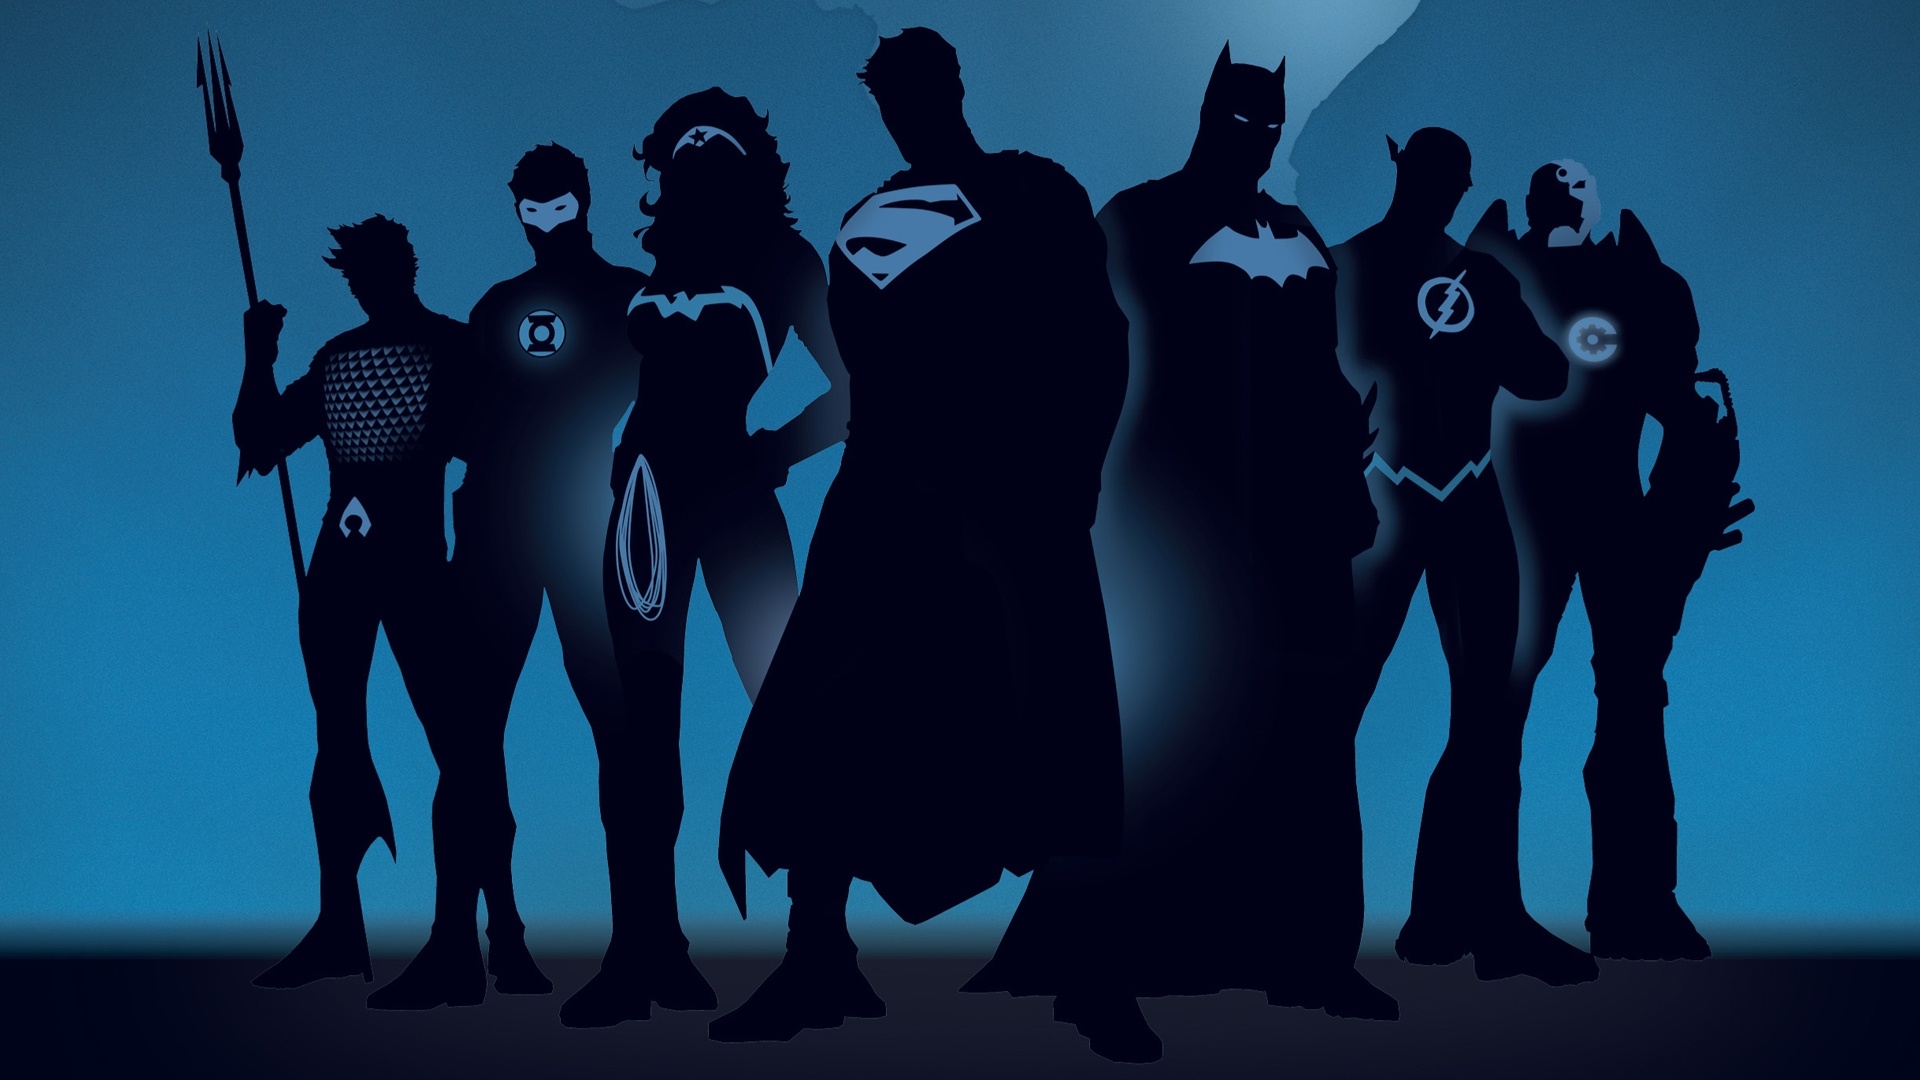 Justice League wallpaper hd